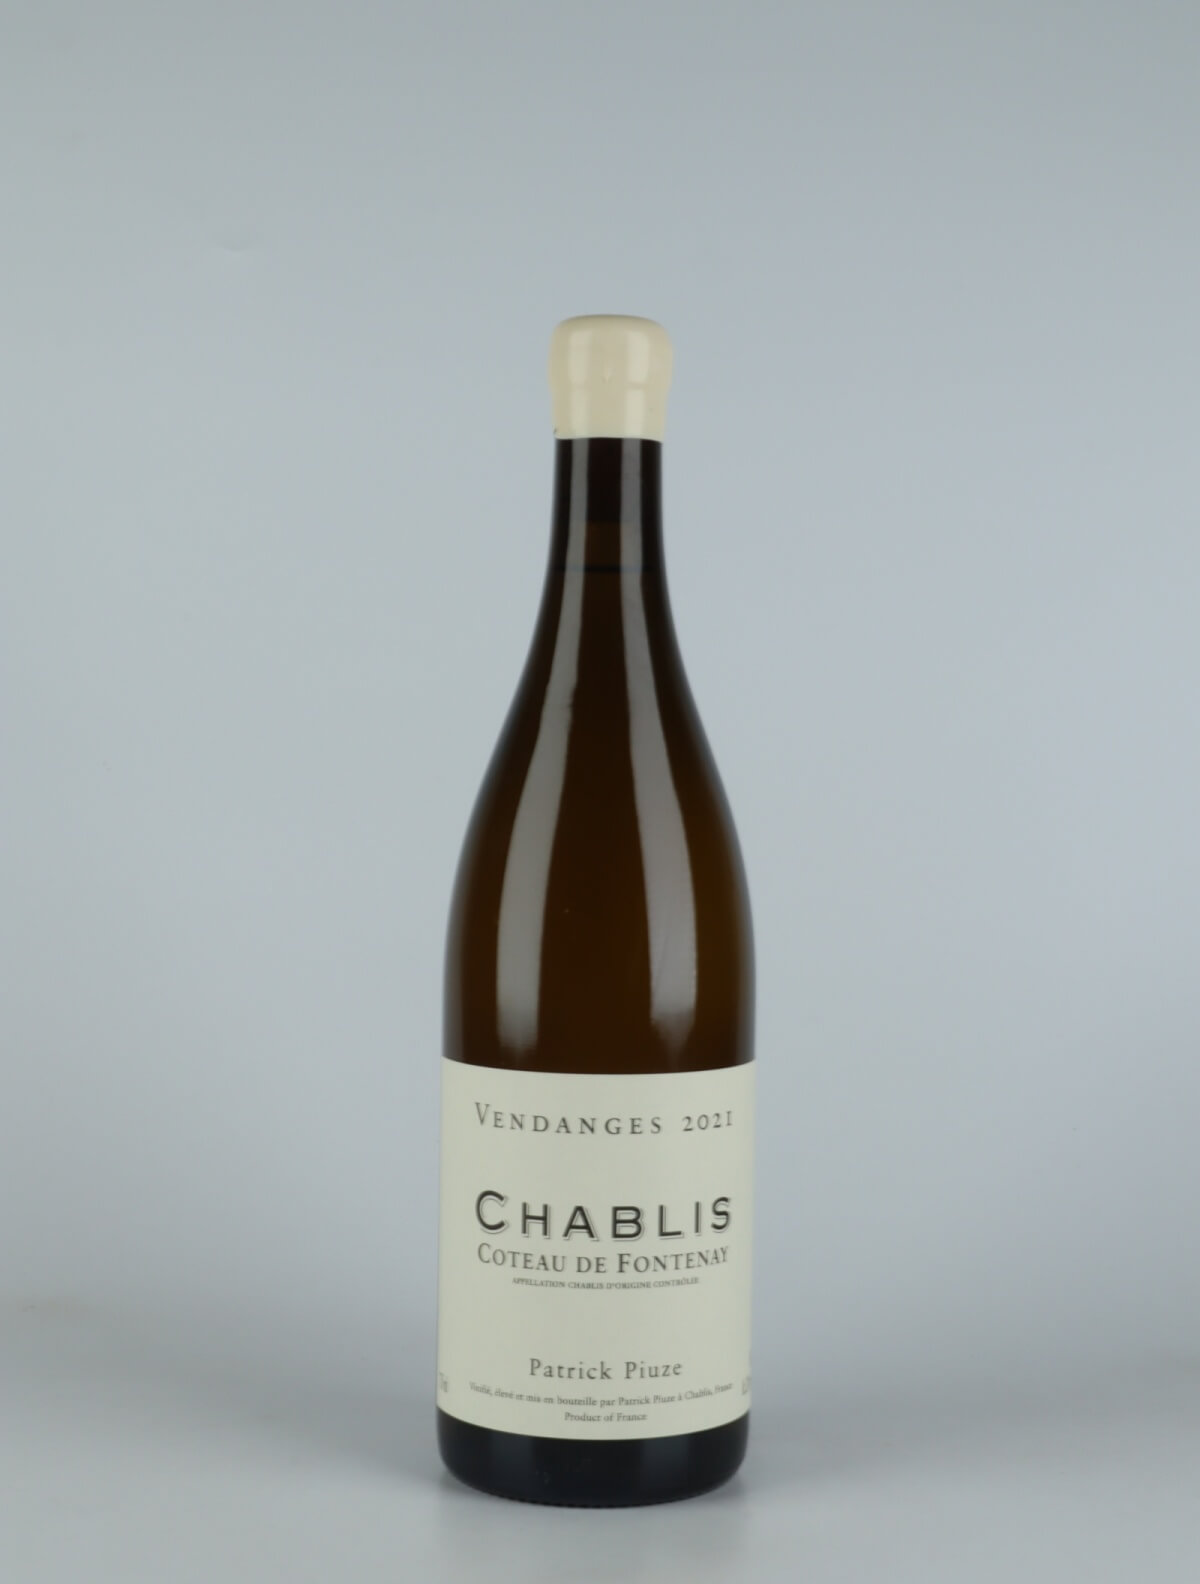 A bottle 2021 Chablis - Coteau de Fontenay White wine from Patrick Piuze, Burgundy in France